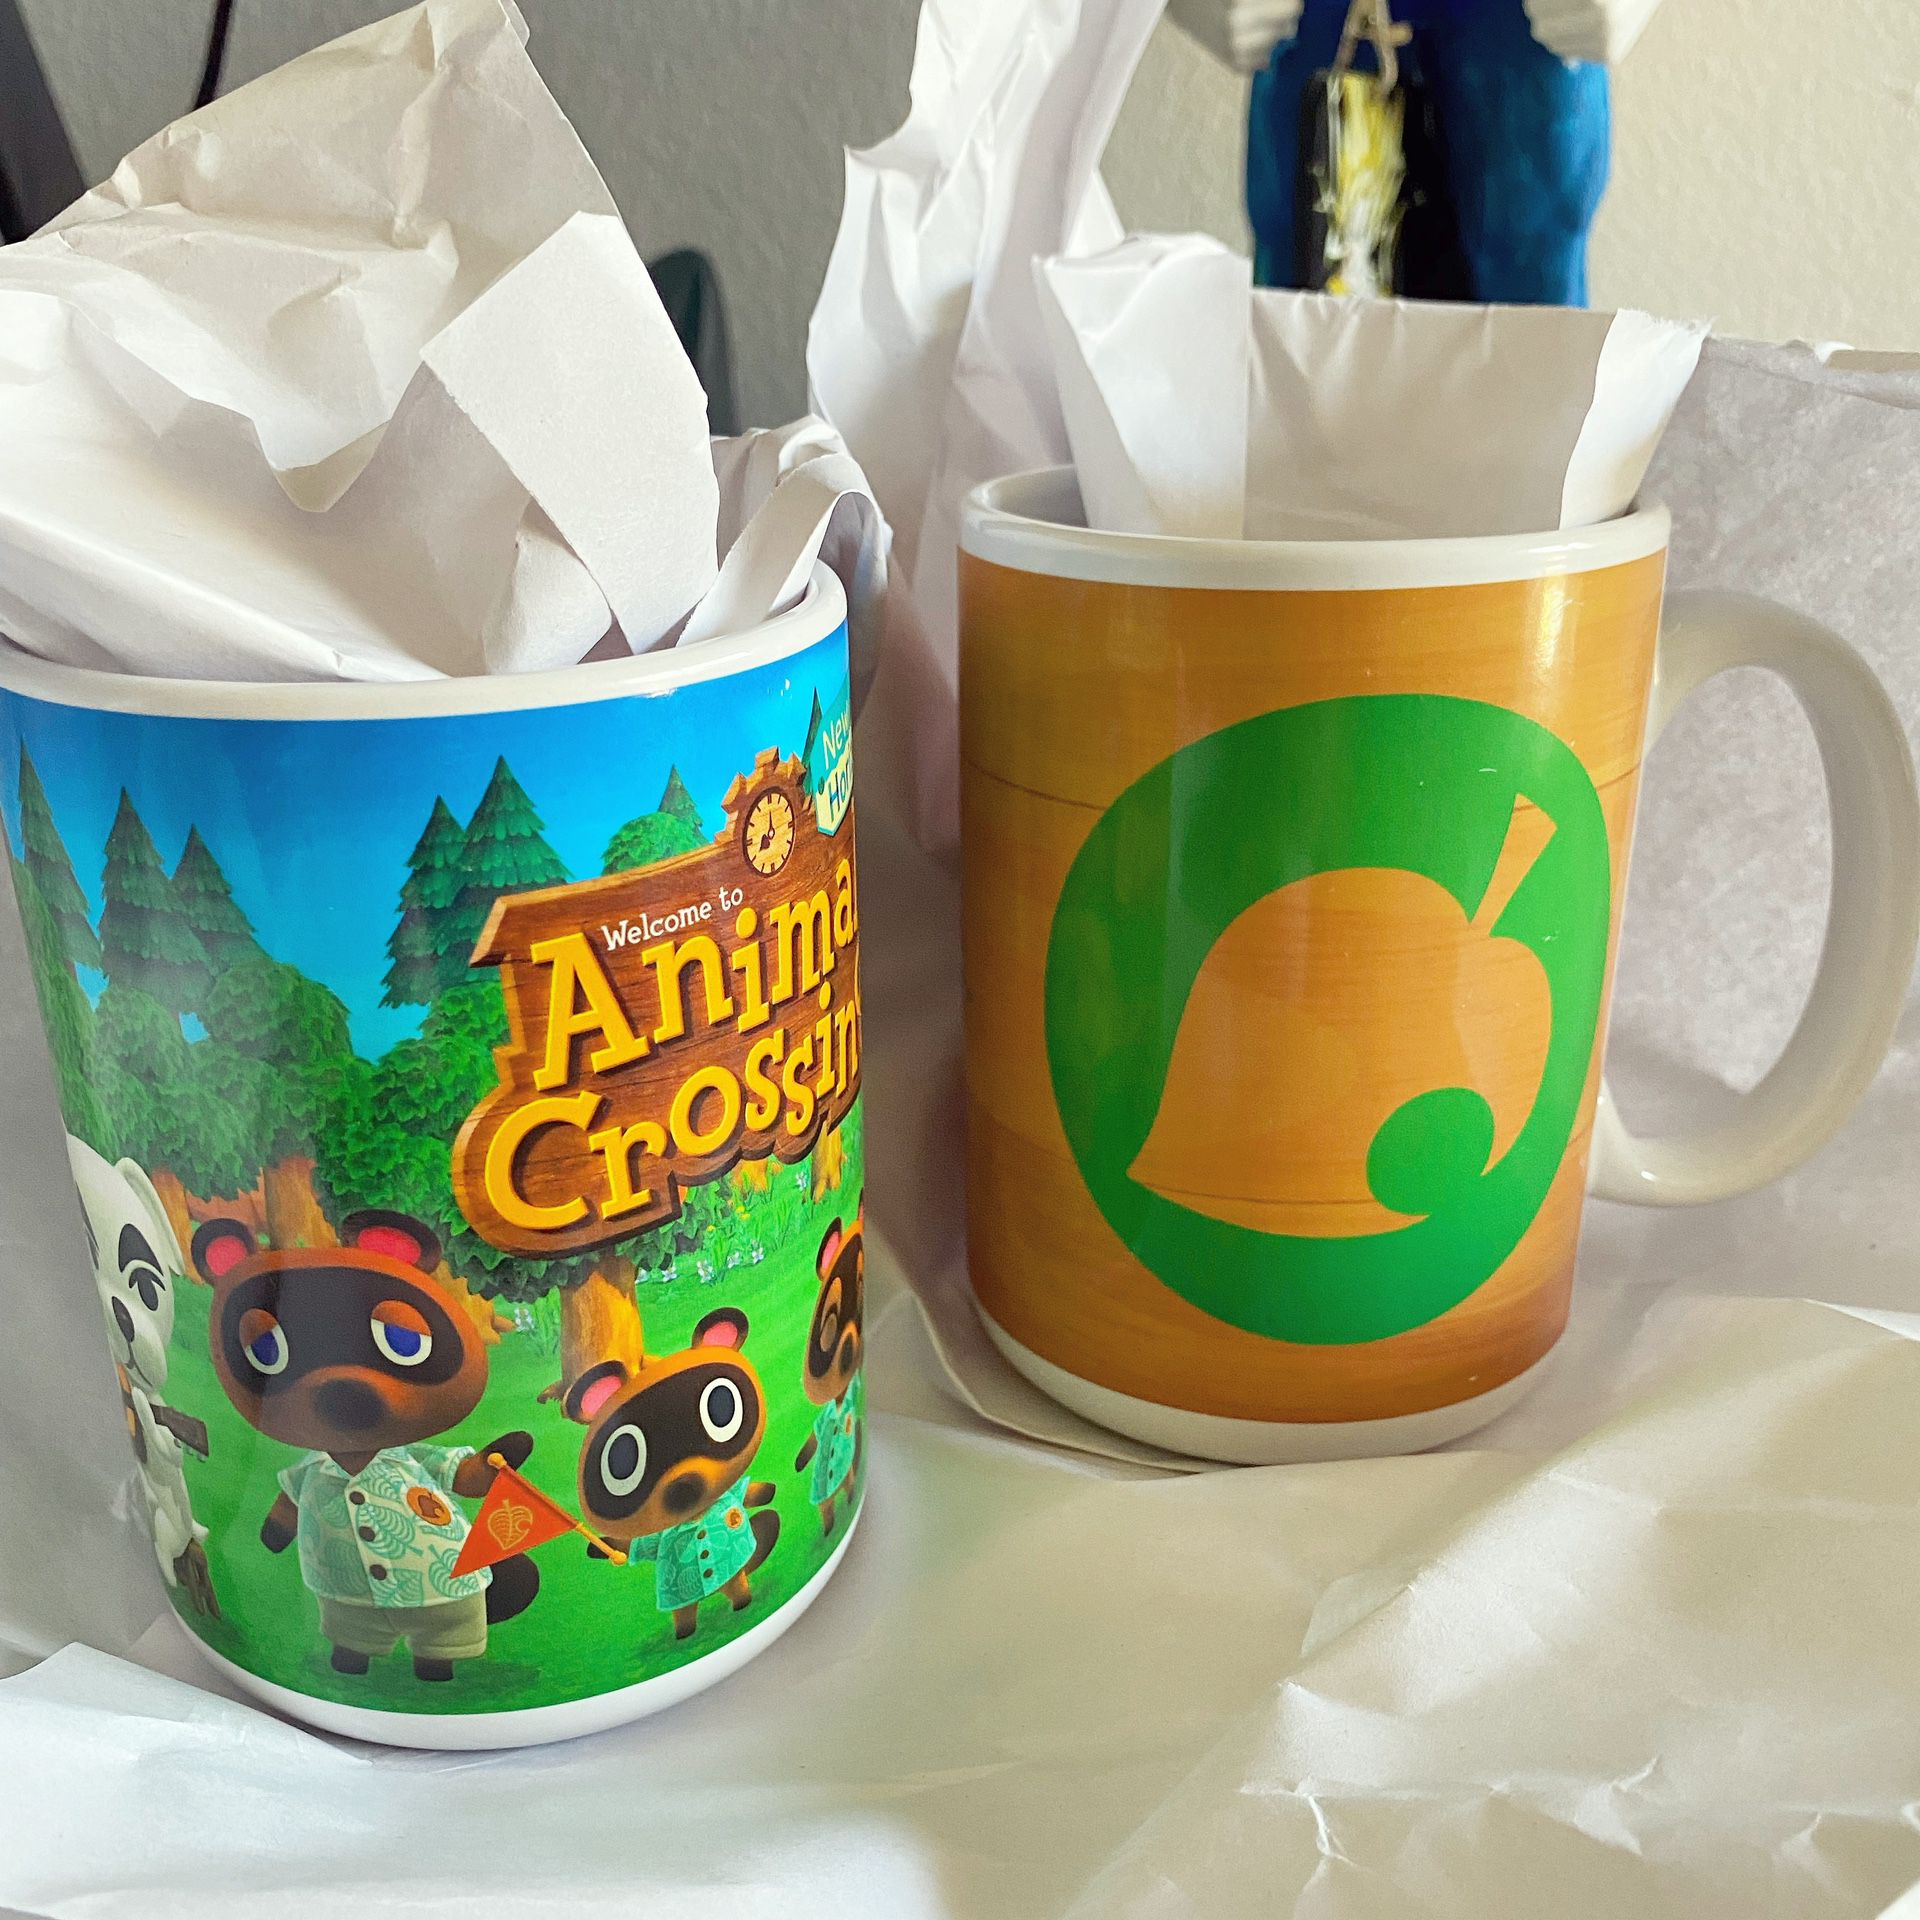 Animal Crossing Mugs Both For $10 New